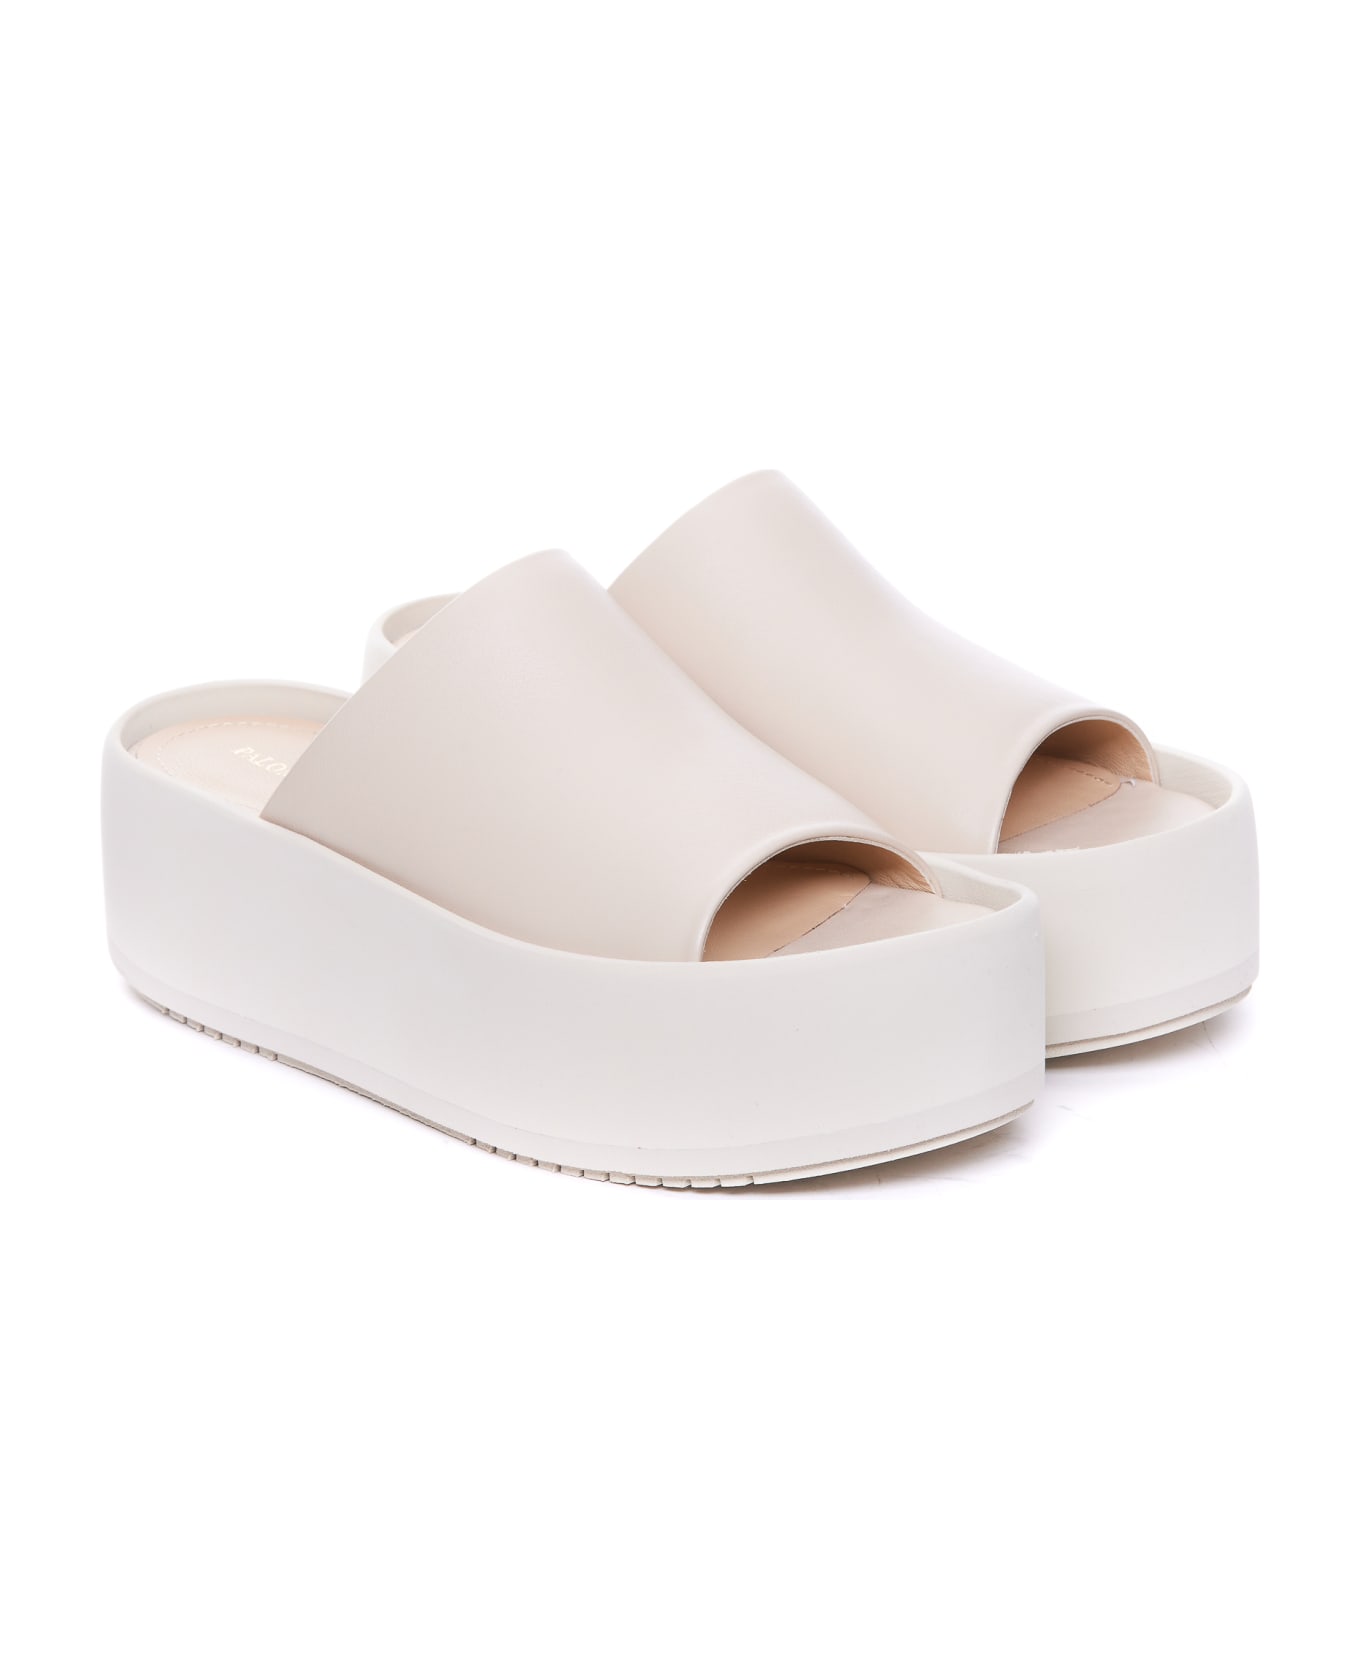 Paloma Barceló Minsi Platform Sandals - White